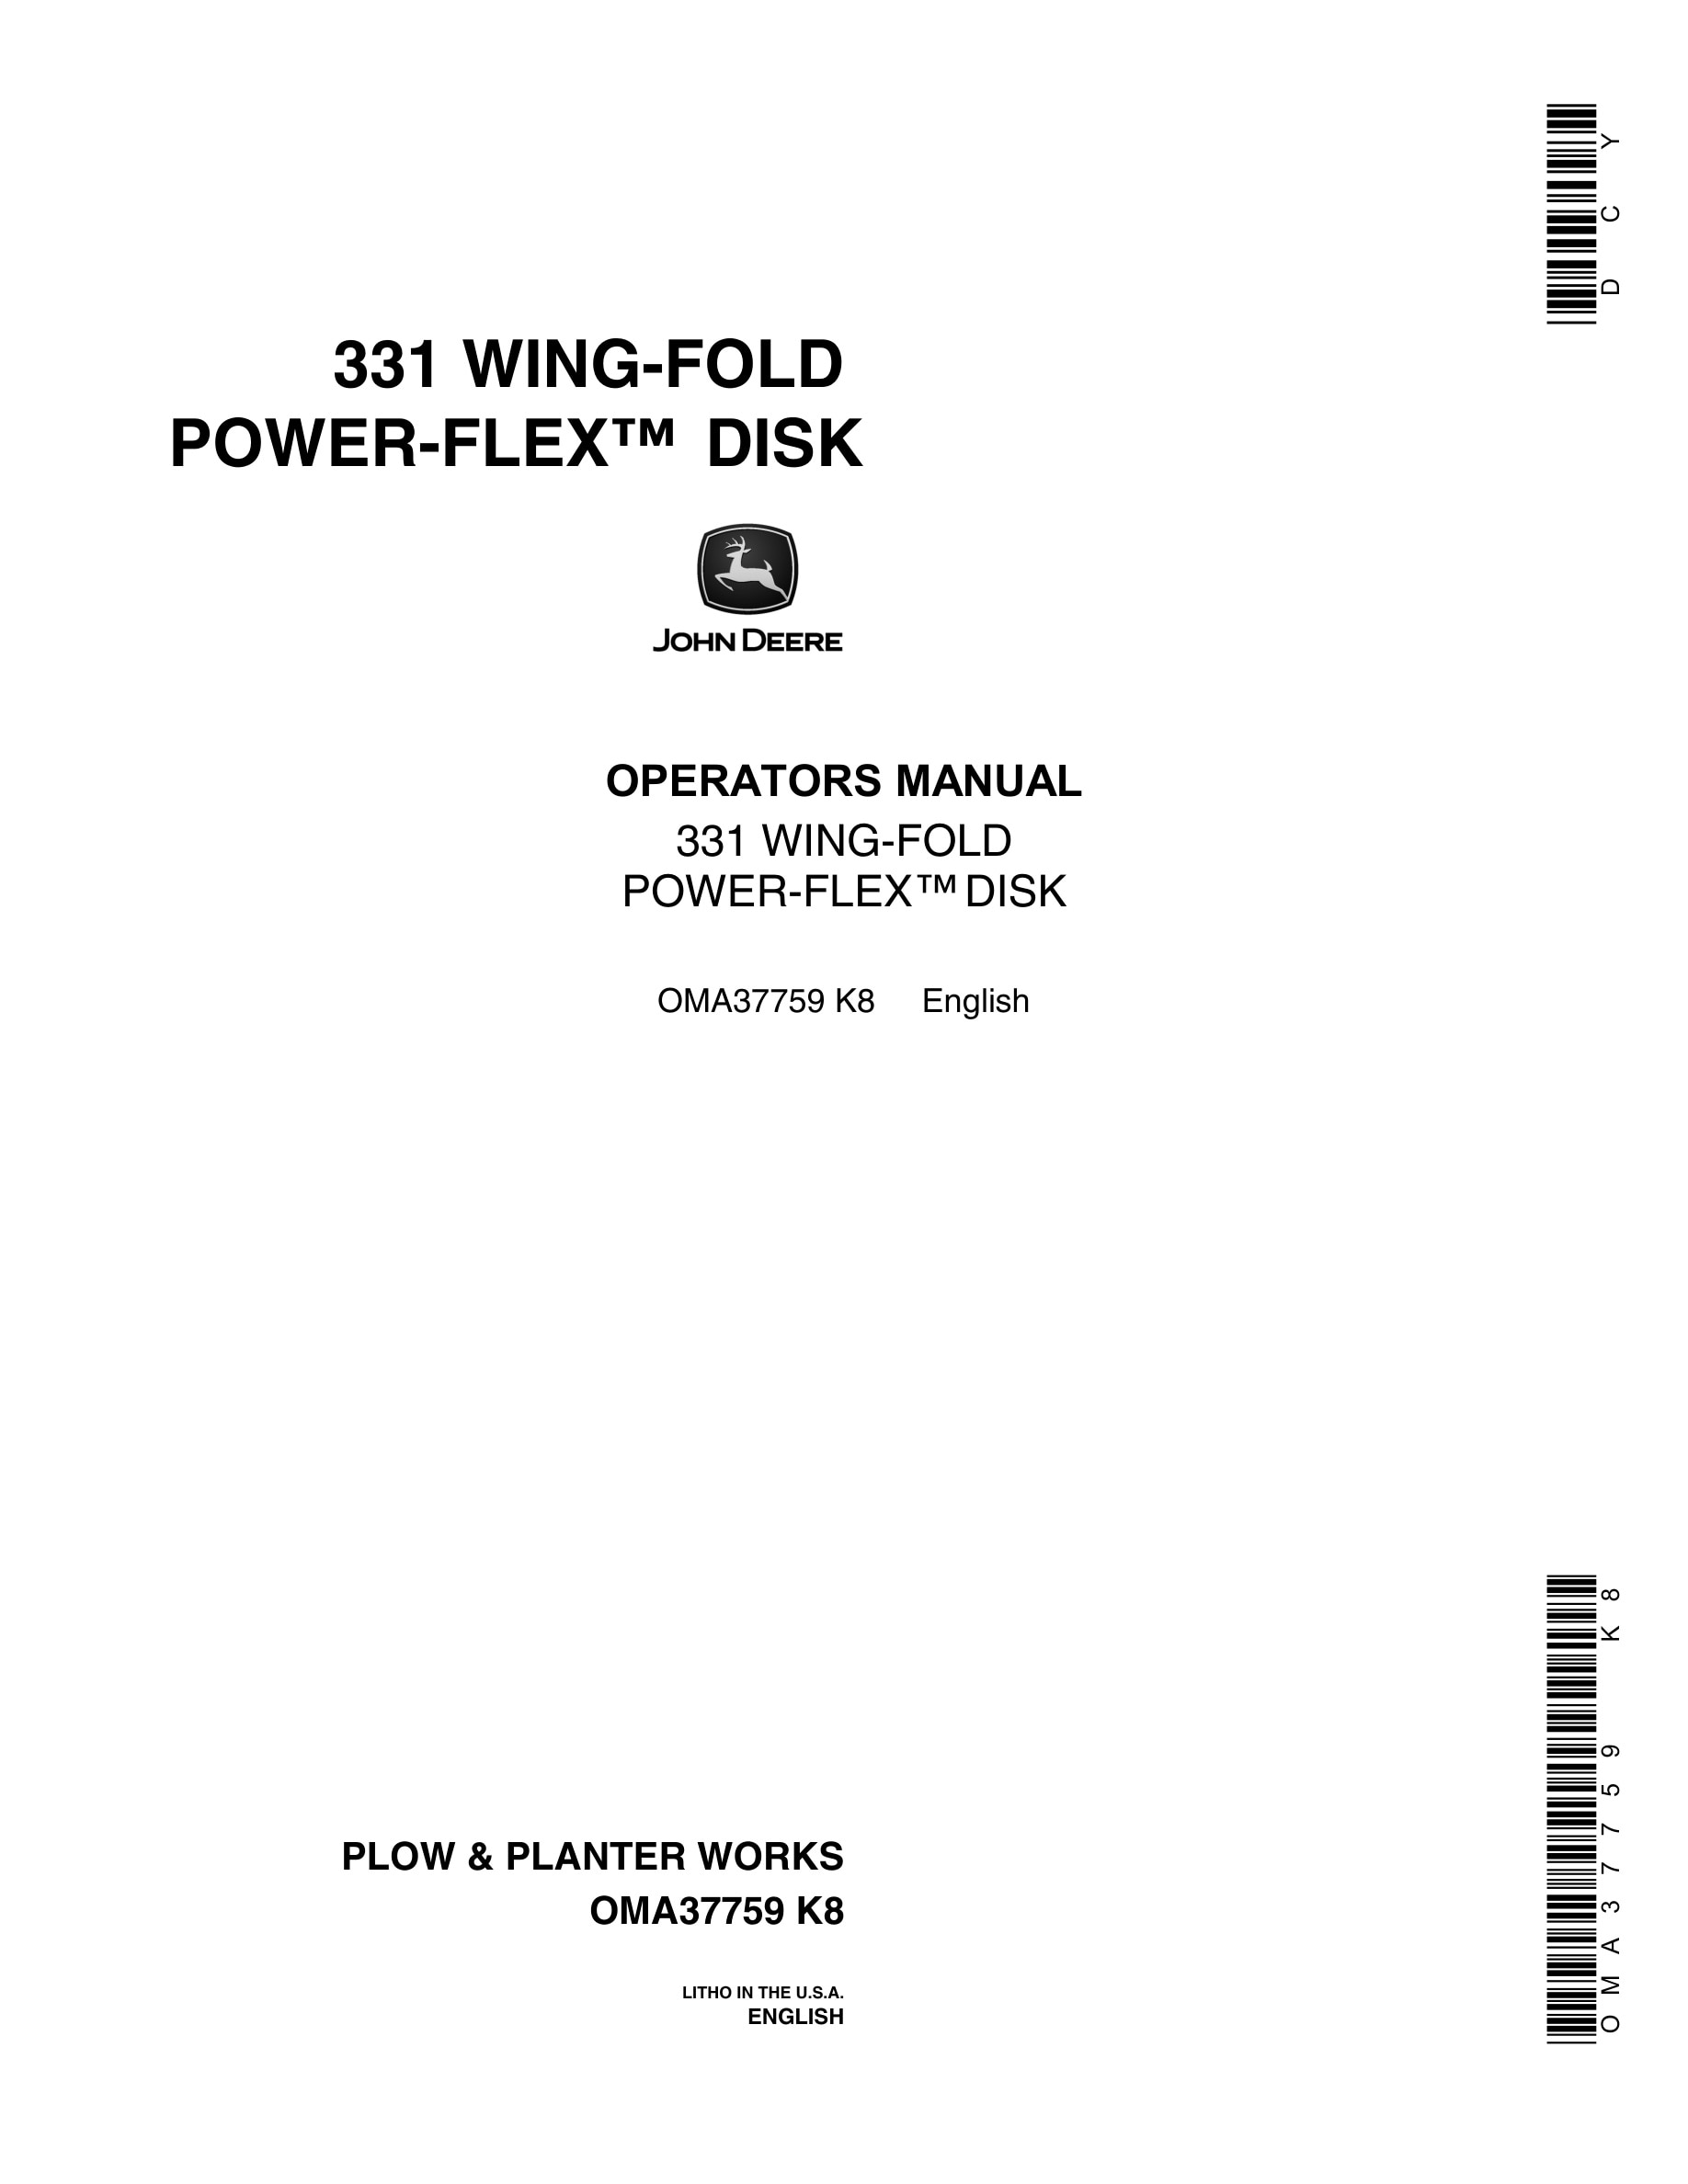 John Deere 331 WING-FOLD POWER-FLEX DISK Operator Manual OMA37759-1